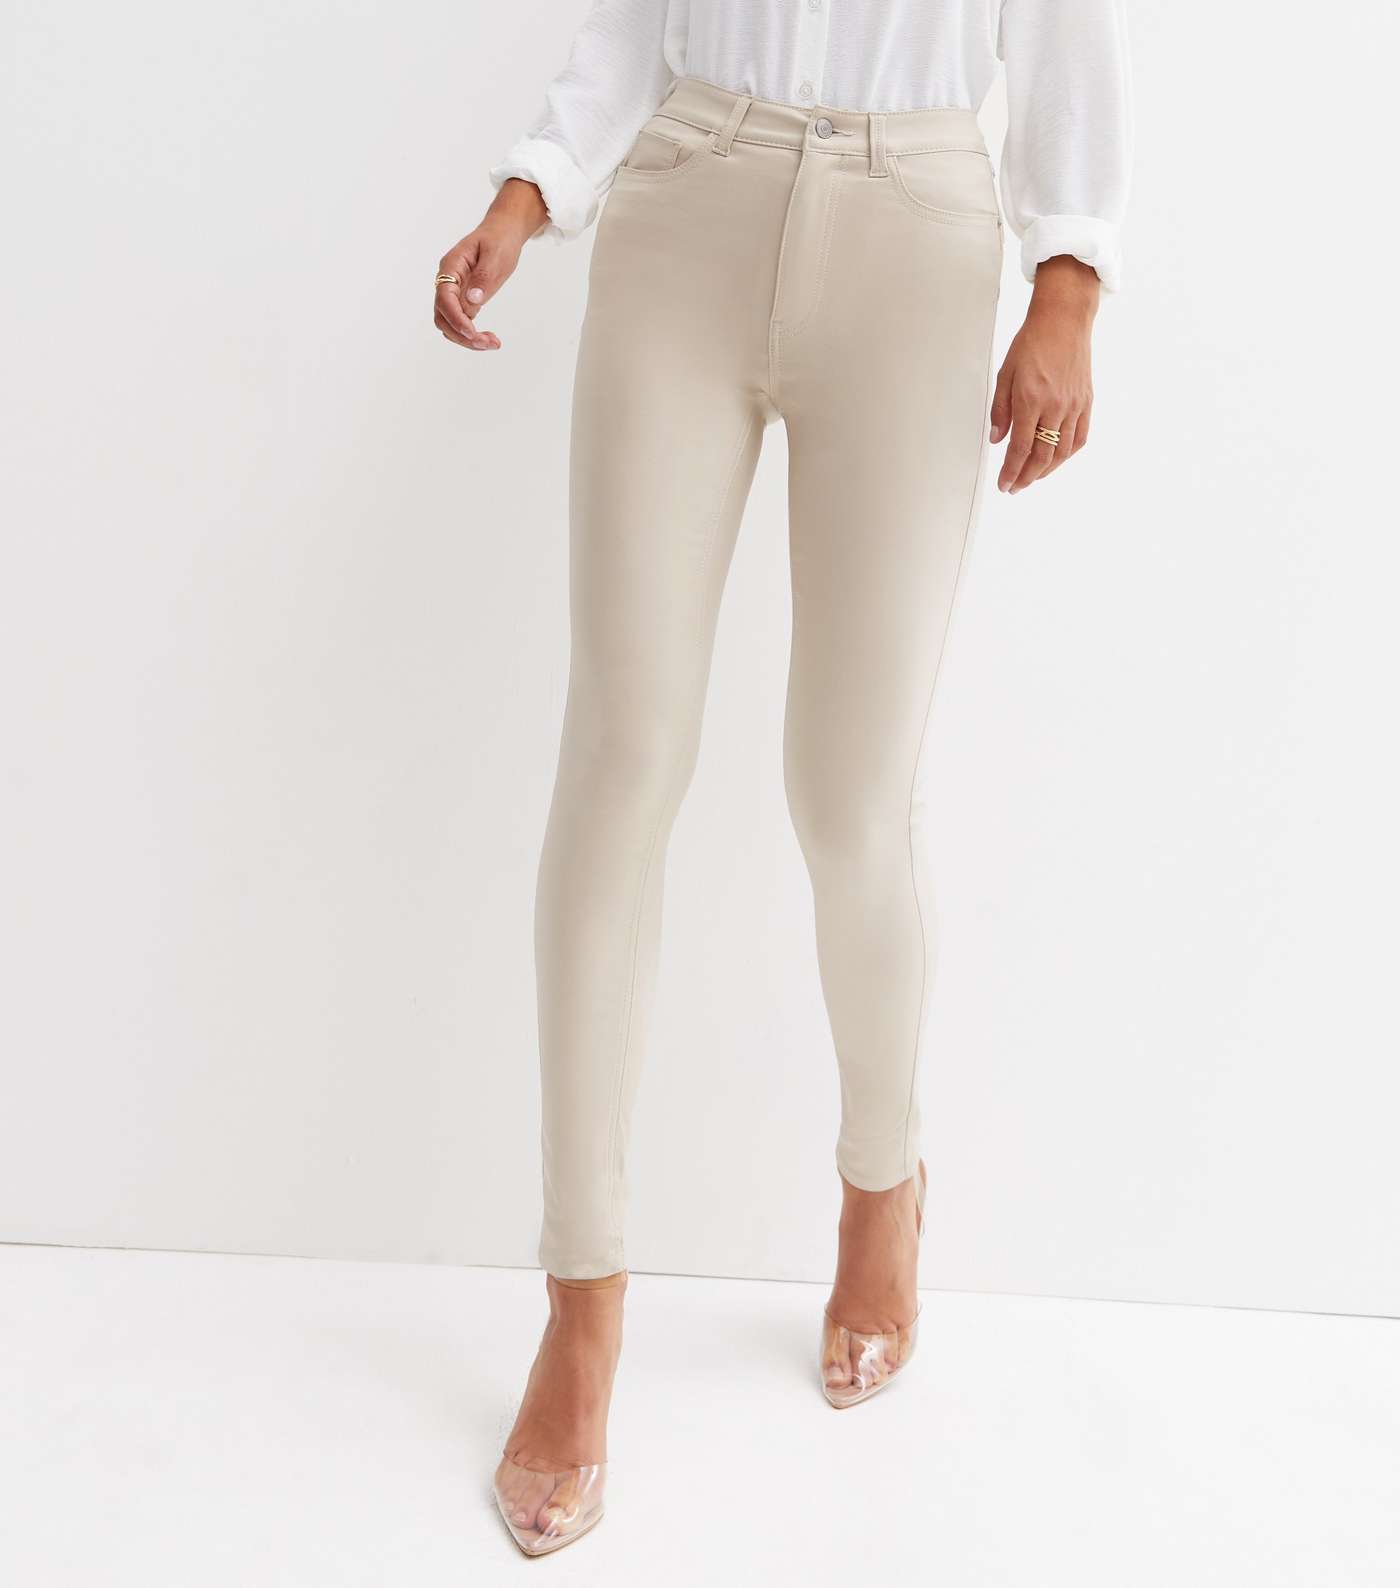 Off White Coated Leather-Look Lift & Shape Jenna Skinny Jeans Image 2